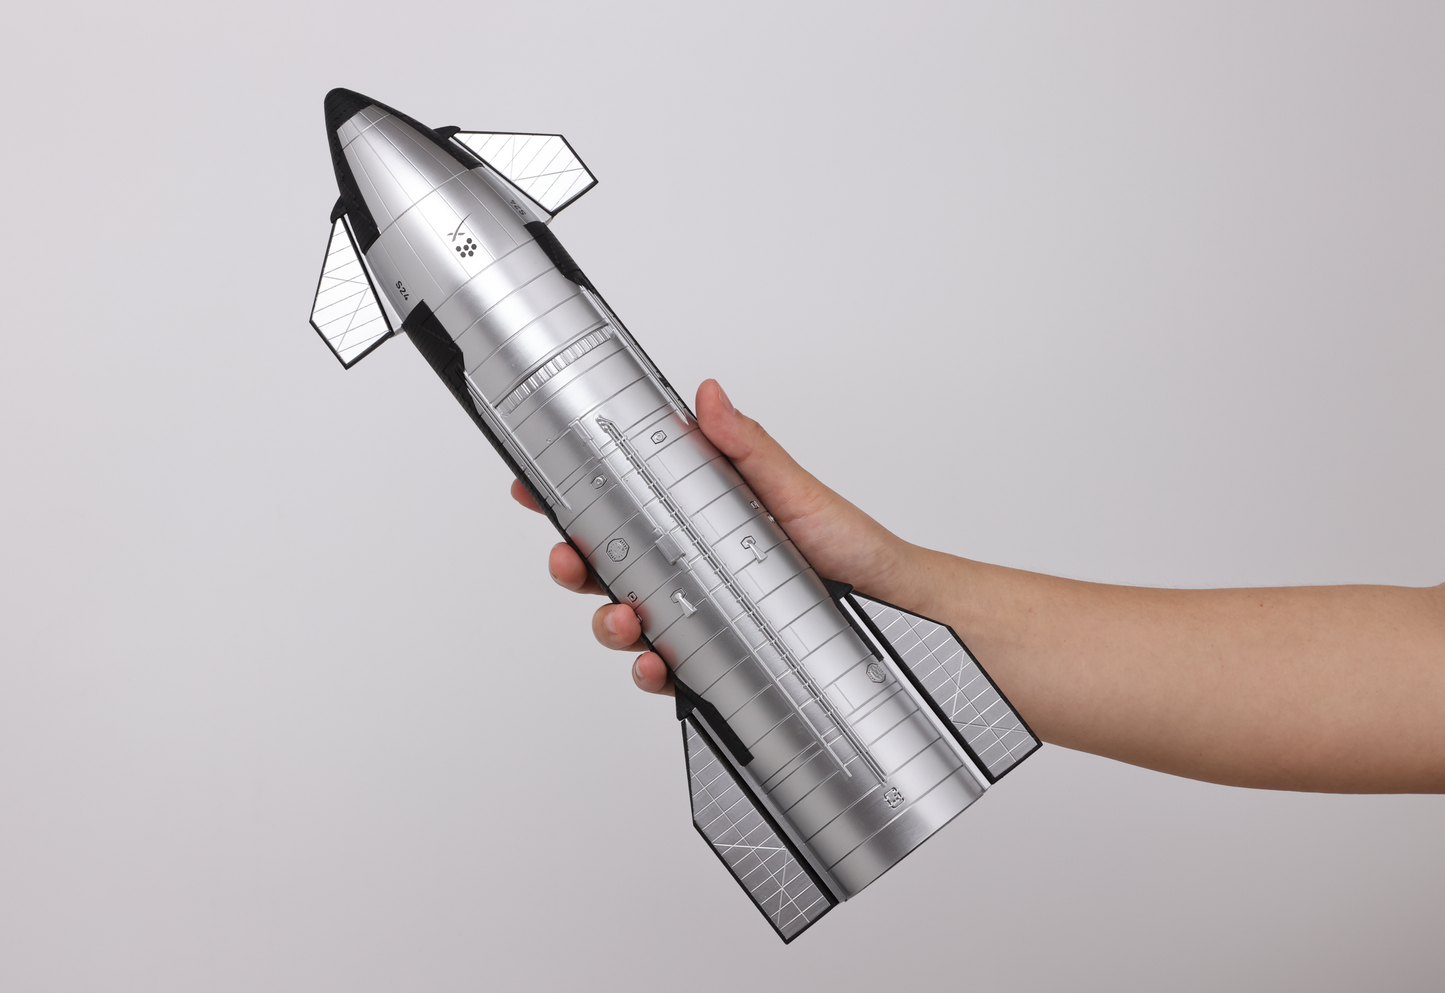 SpaceX Starship 1/144 Ship24 Model smooth version - resin printed super rocket model